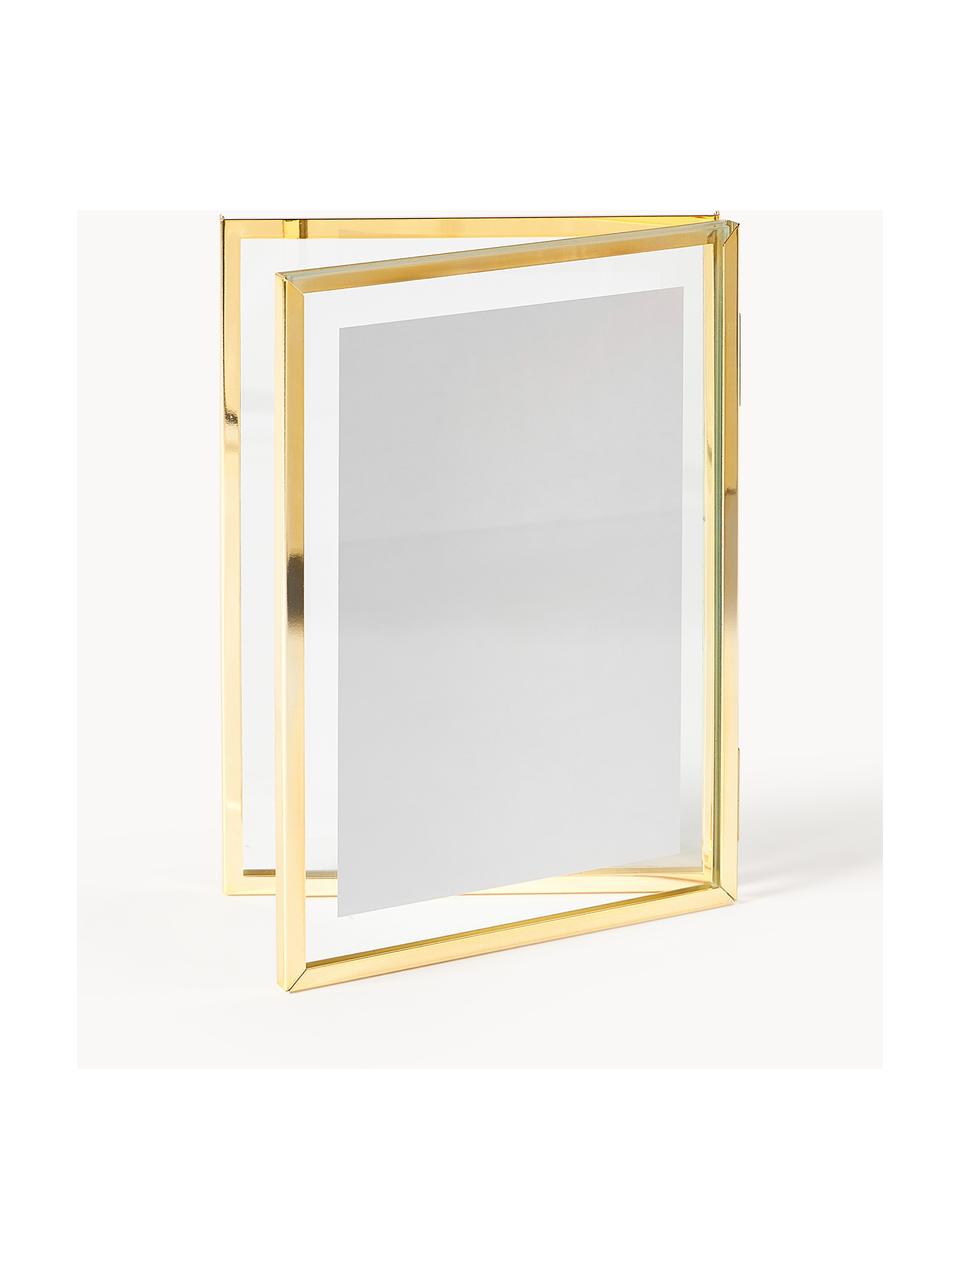 Doppel-Bilderrahmen Kleio, Rahmen: Metall, beschichtet, Goldfarben, 10 x 15 cm